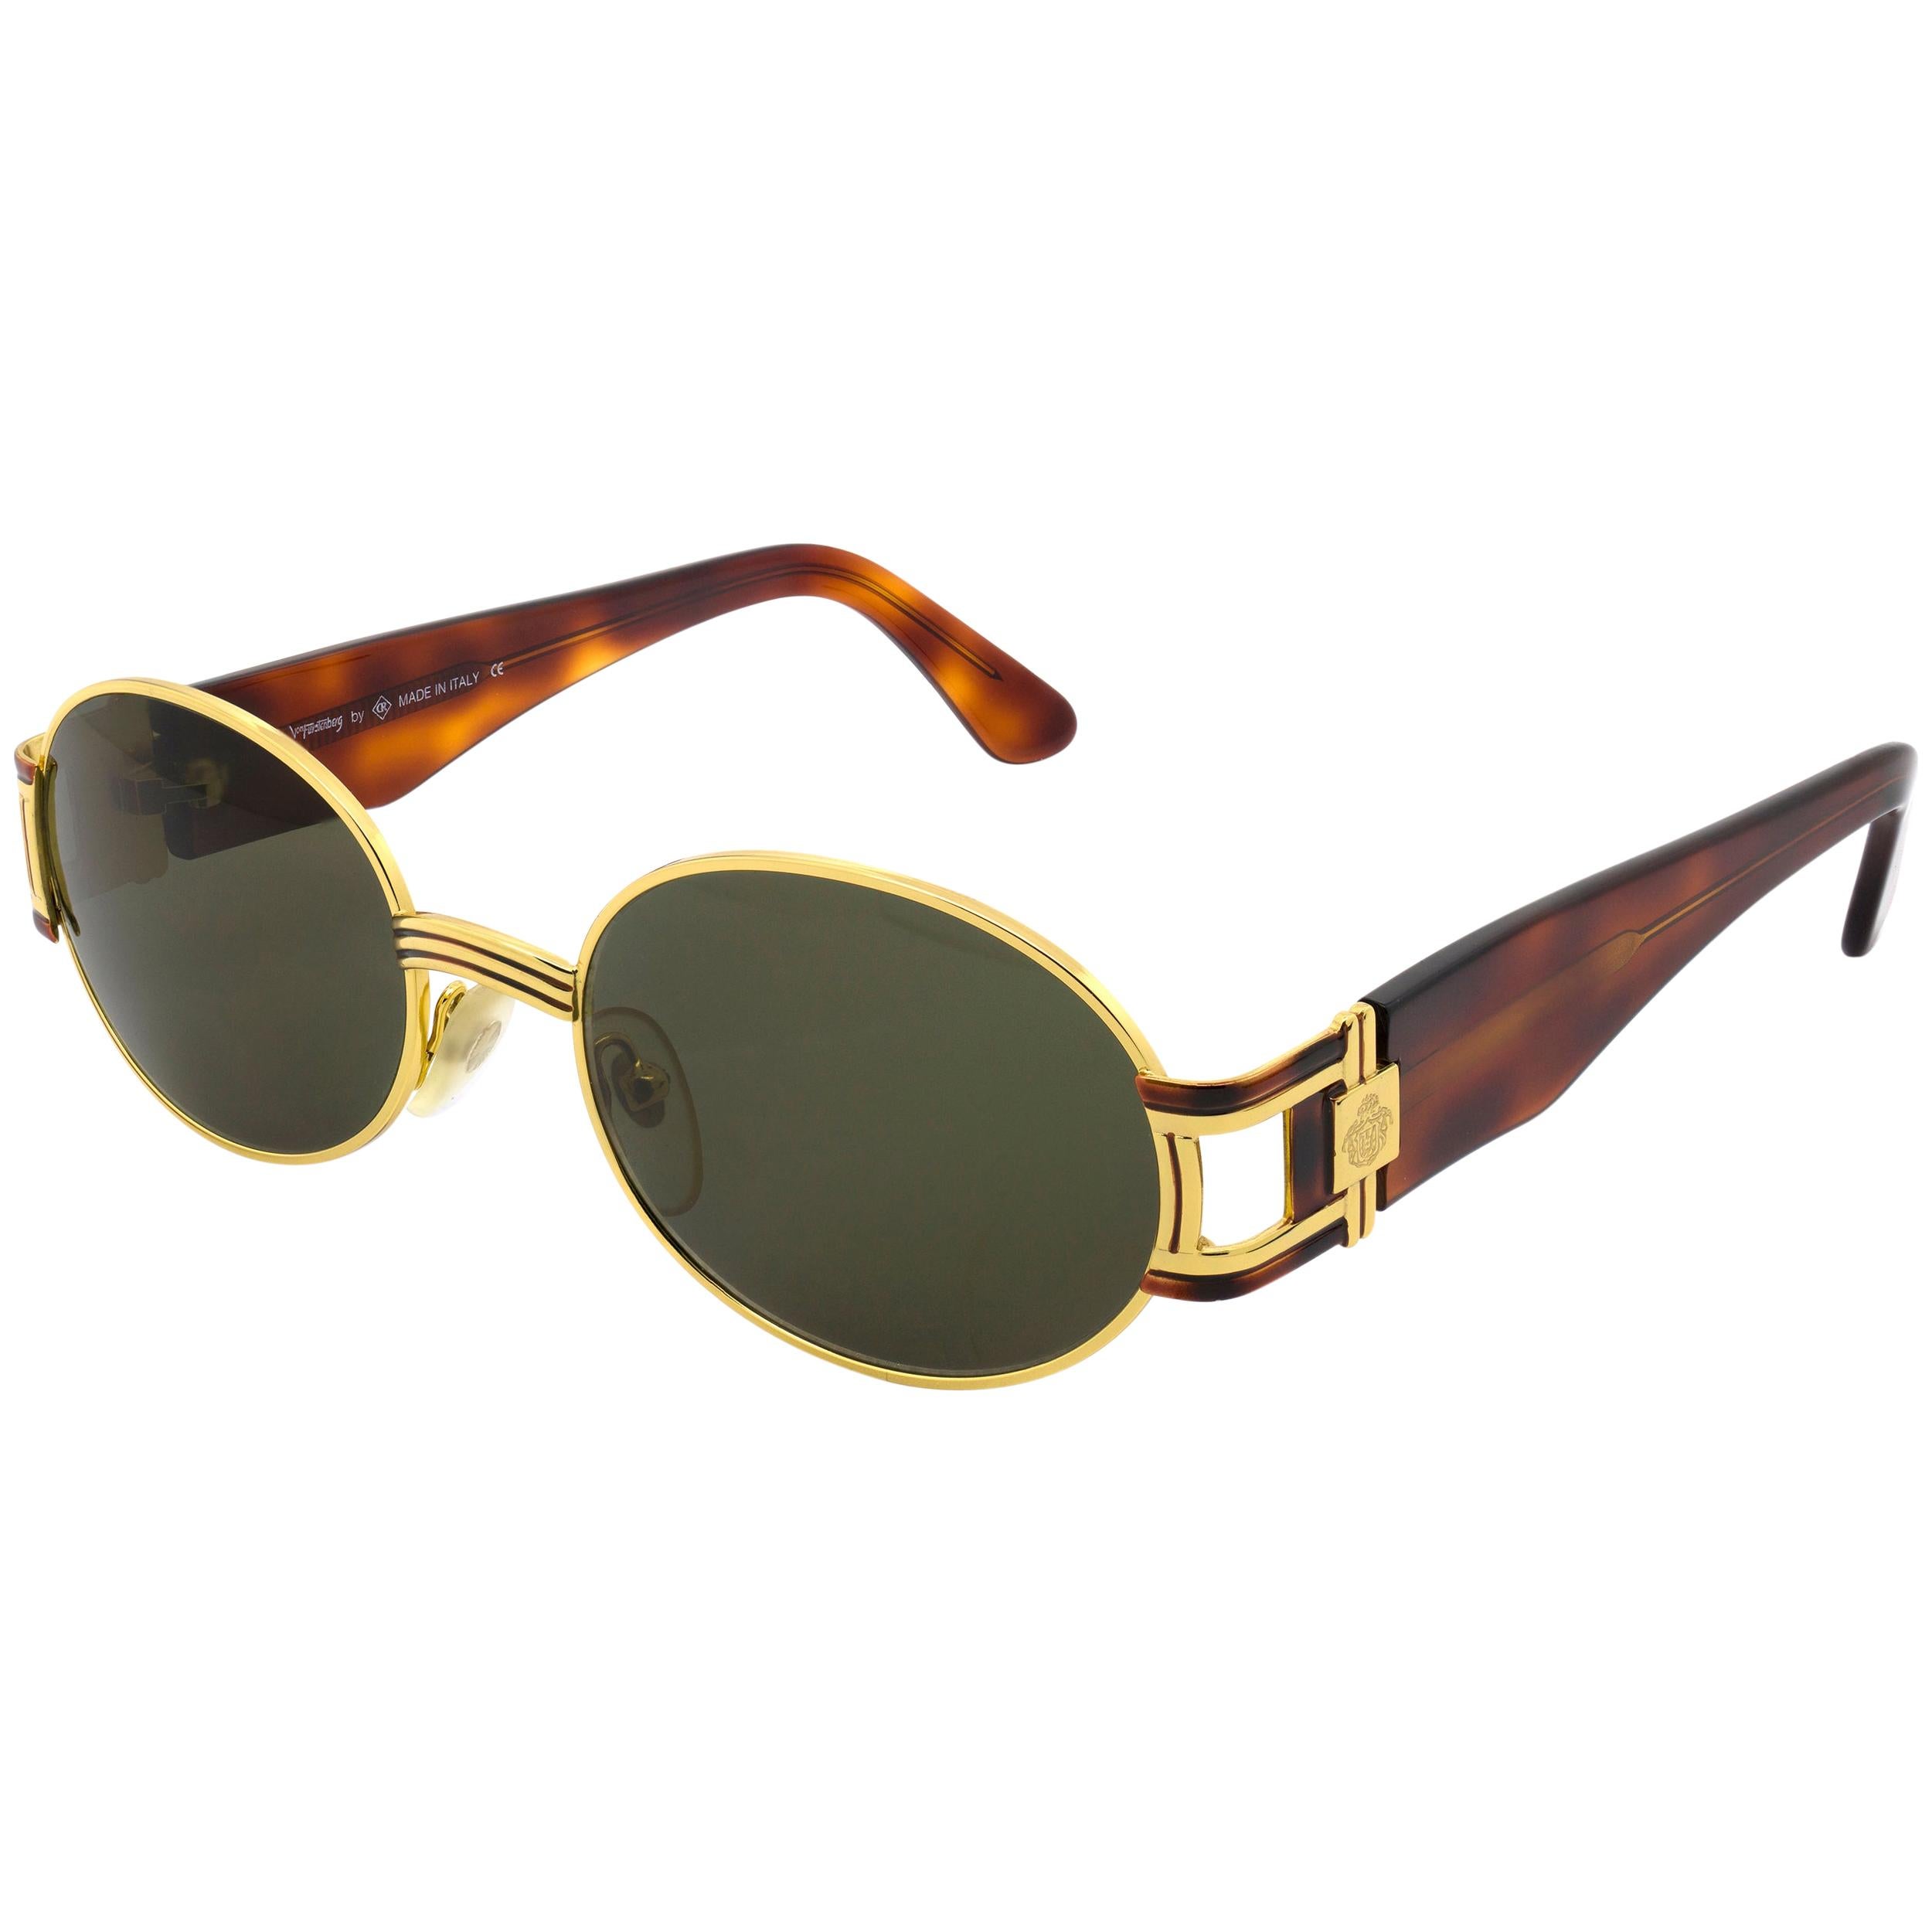 Prince Egon von Furstenberg round vintage sunglasses, Italy 80s For Sale